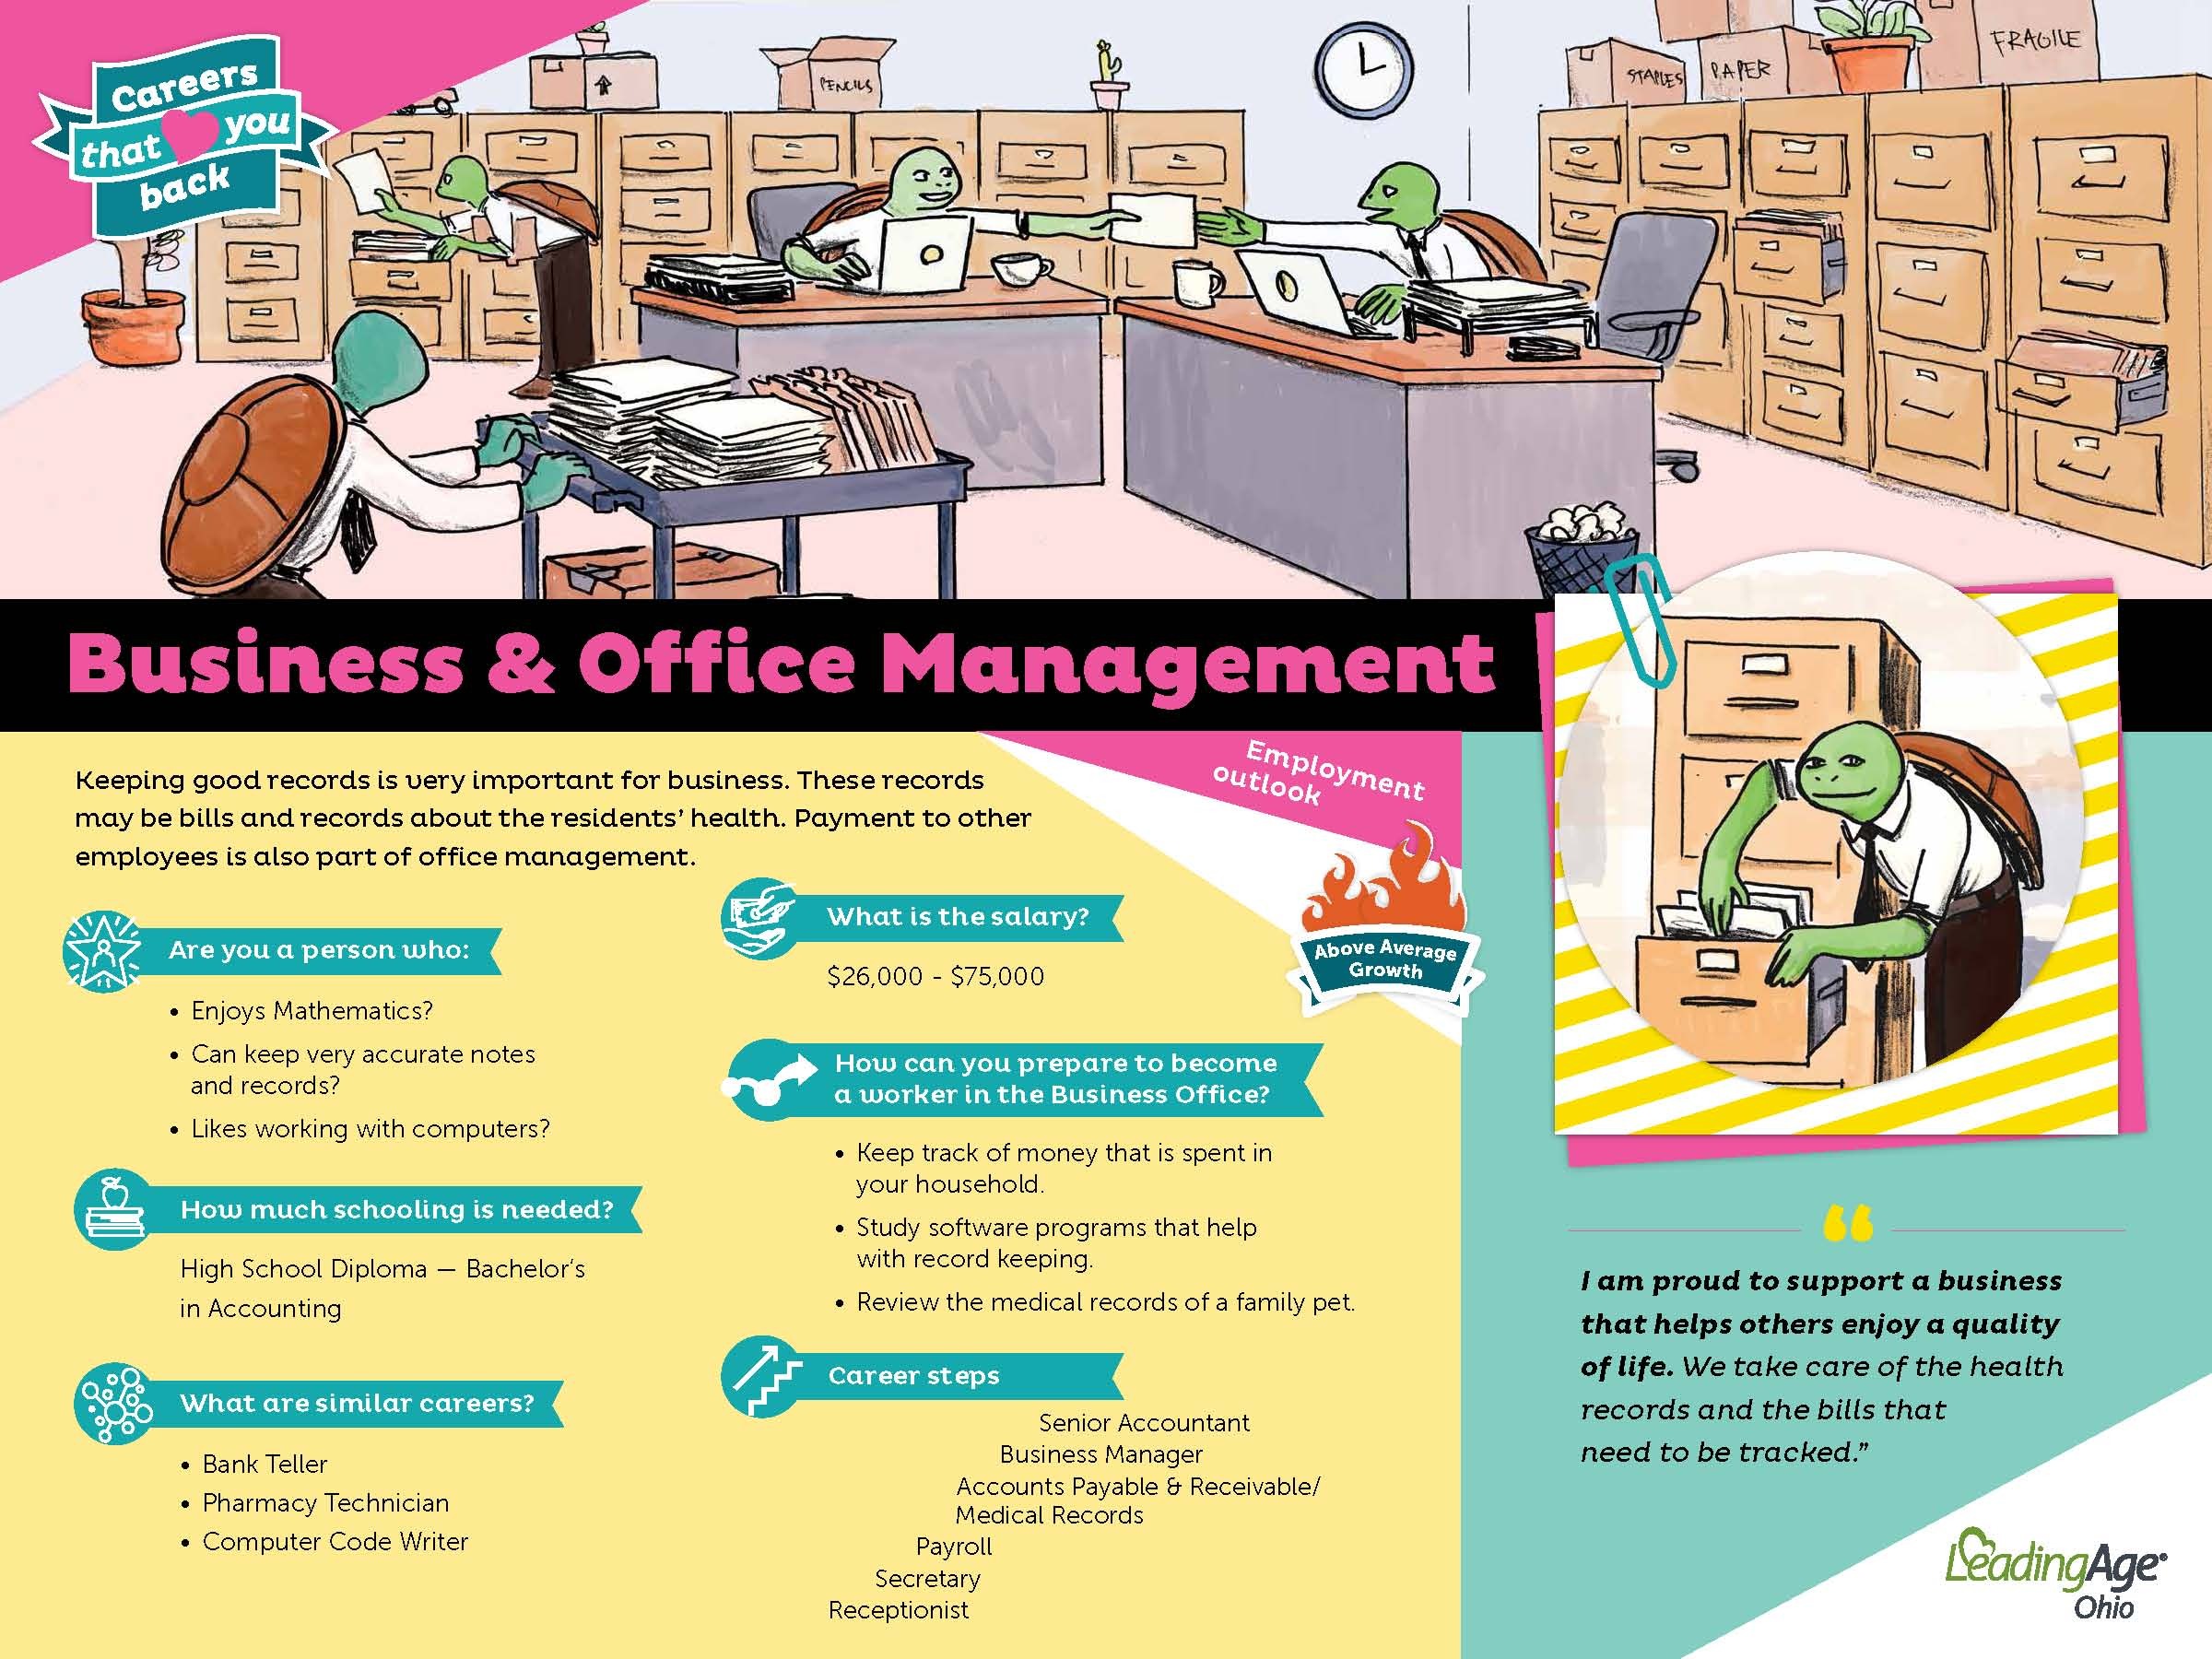 Business & Office Management